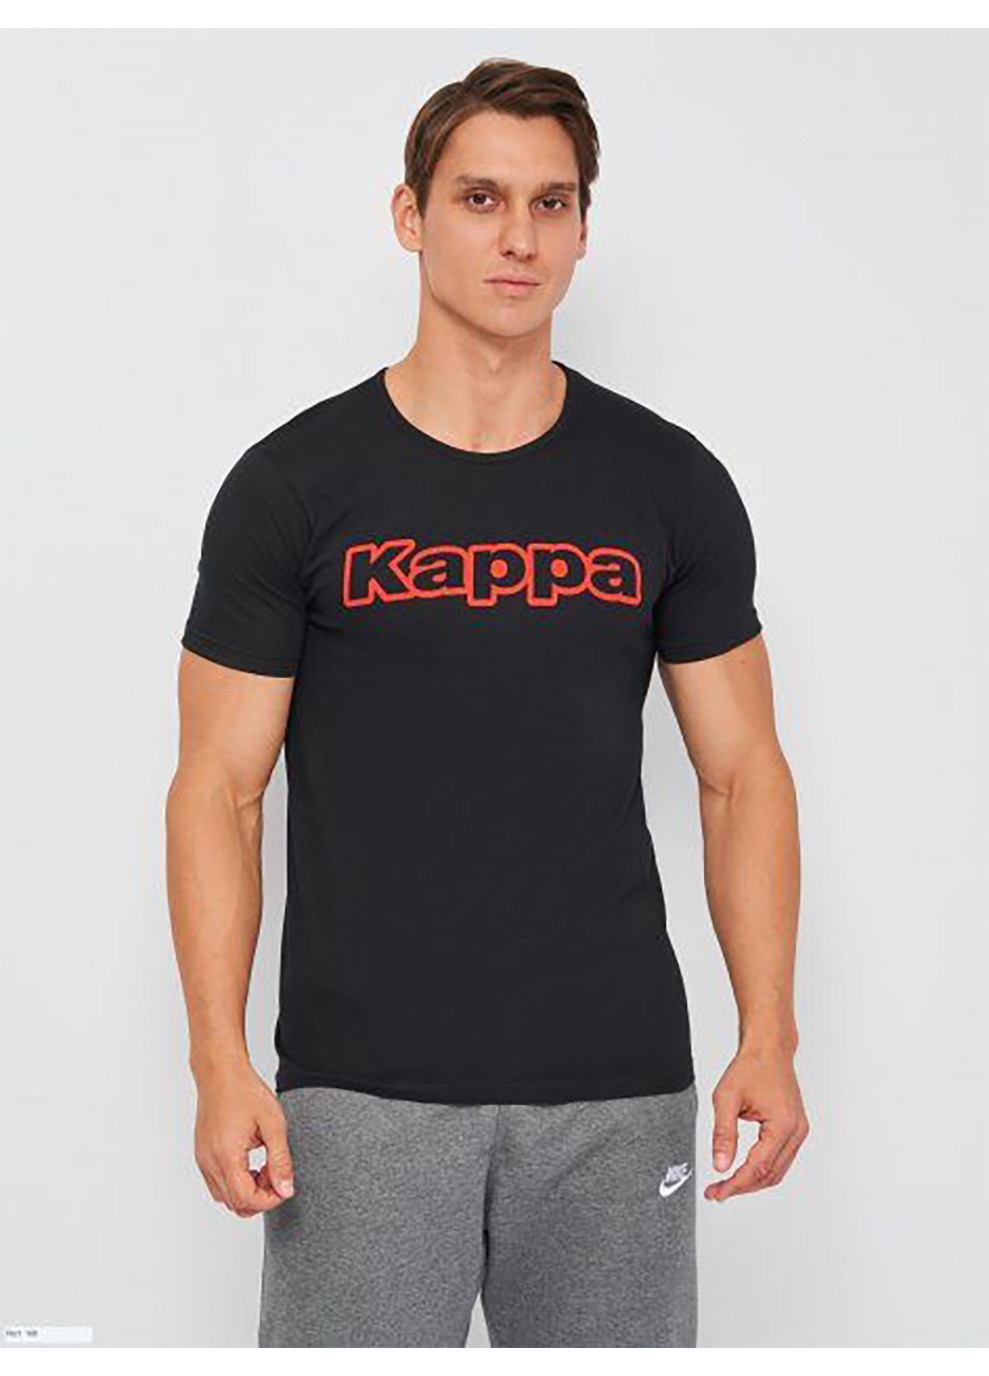 Черная футболка t-shirt mezza manica girocollo con stampa logo petto черный m муж k1335 nero-m Kappa